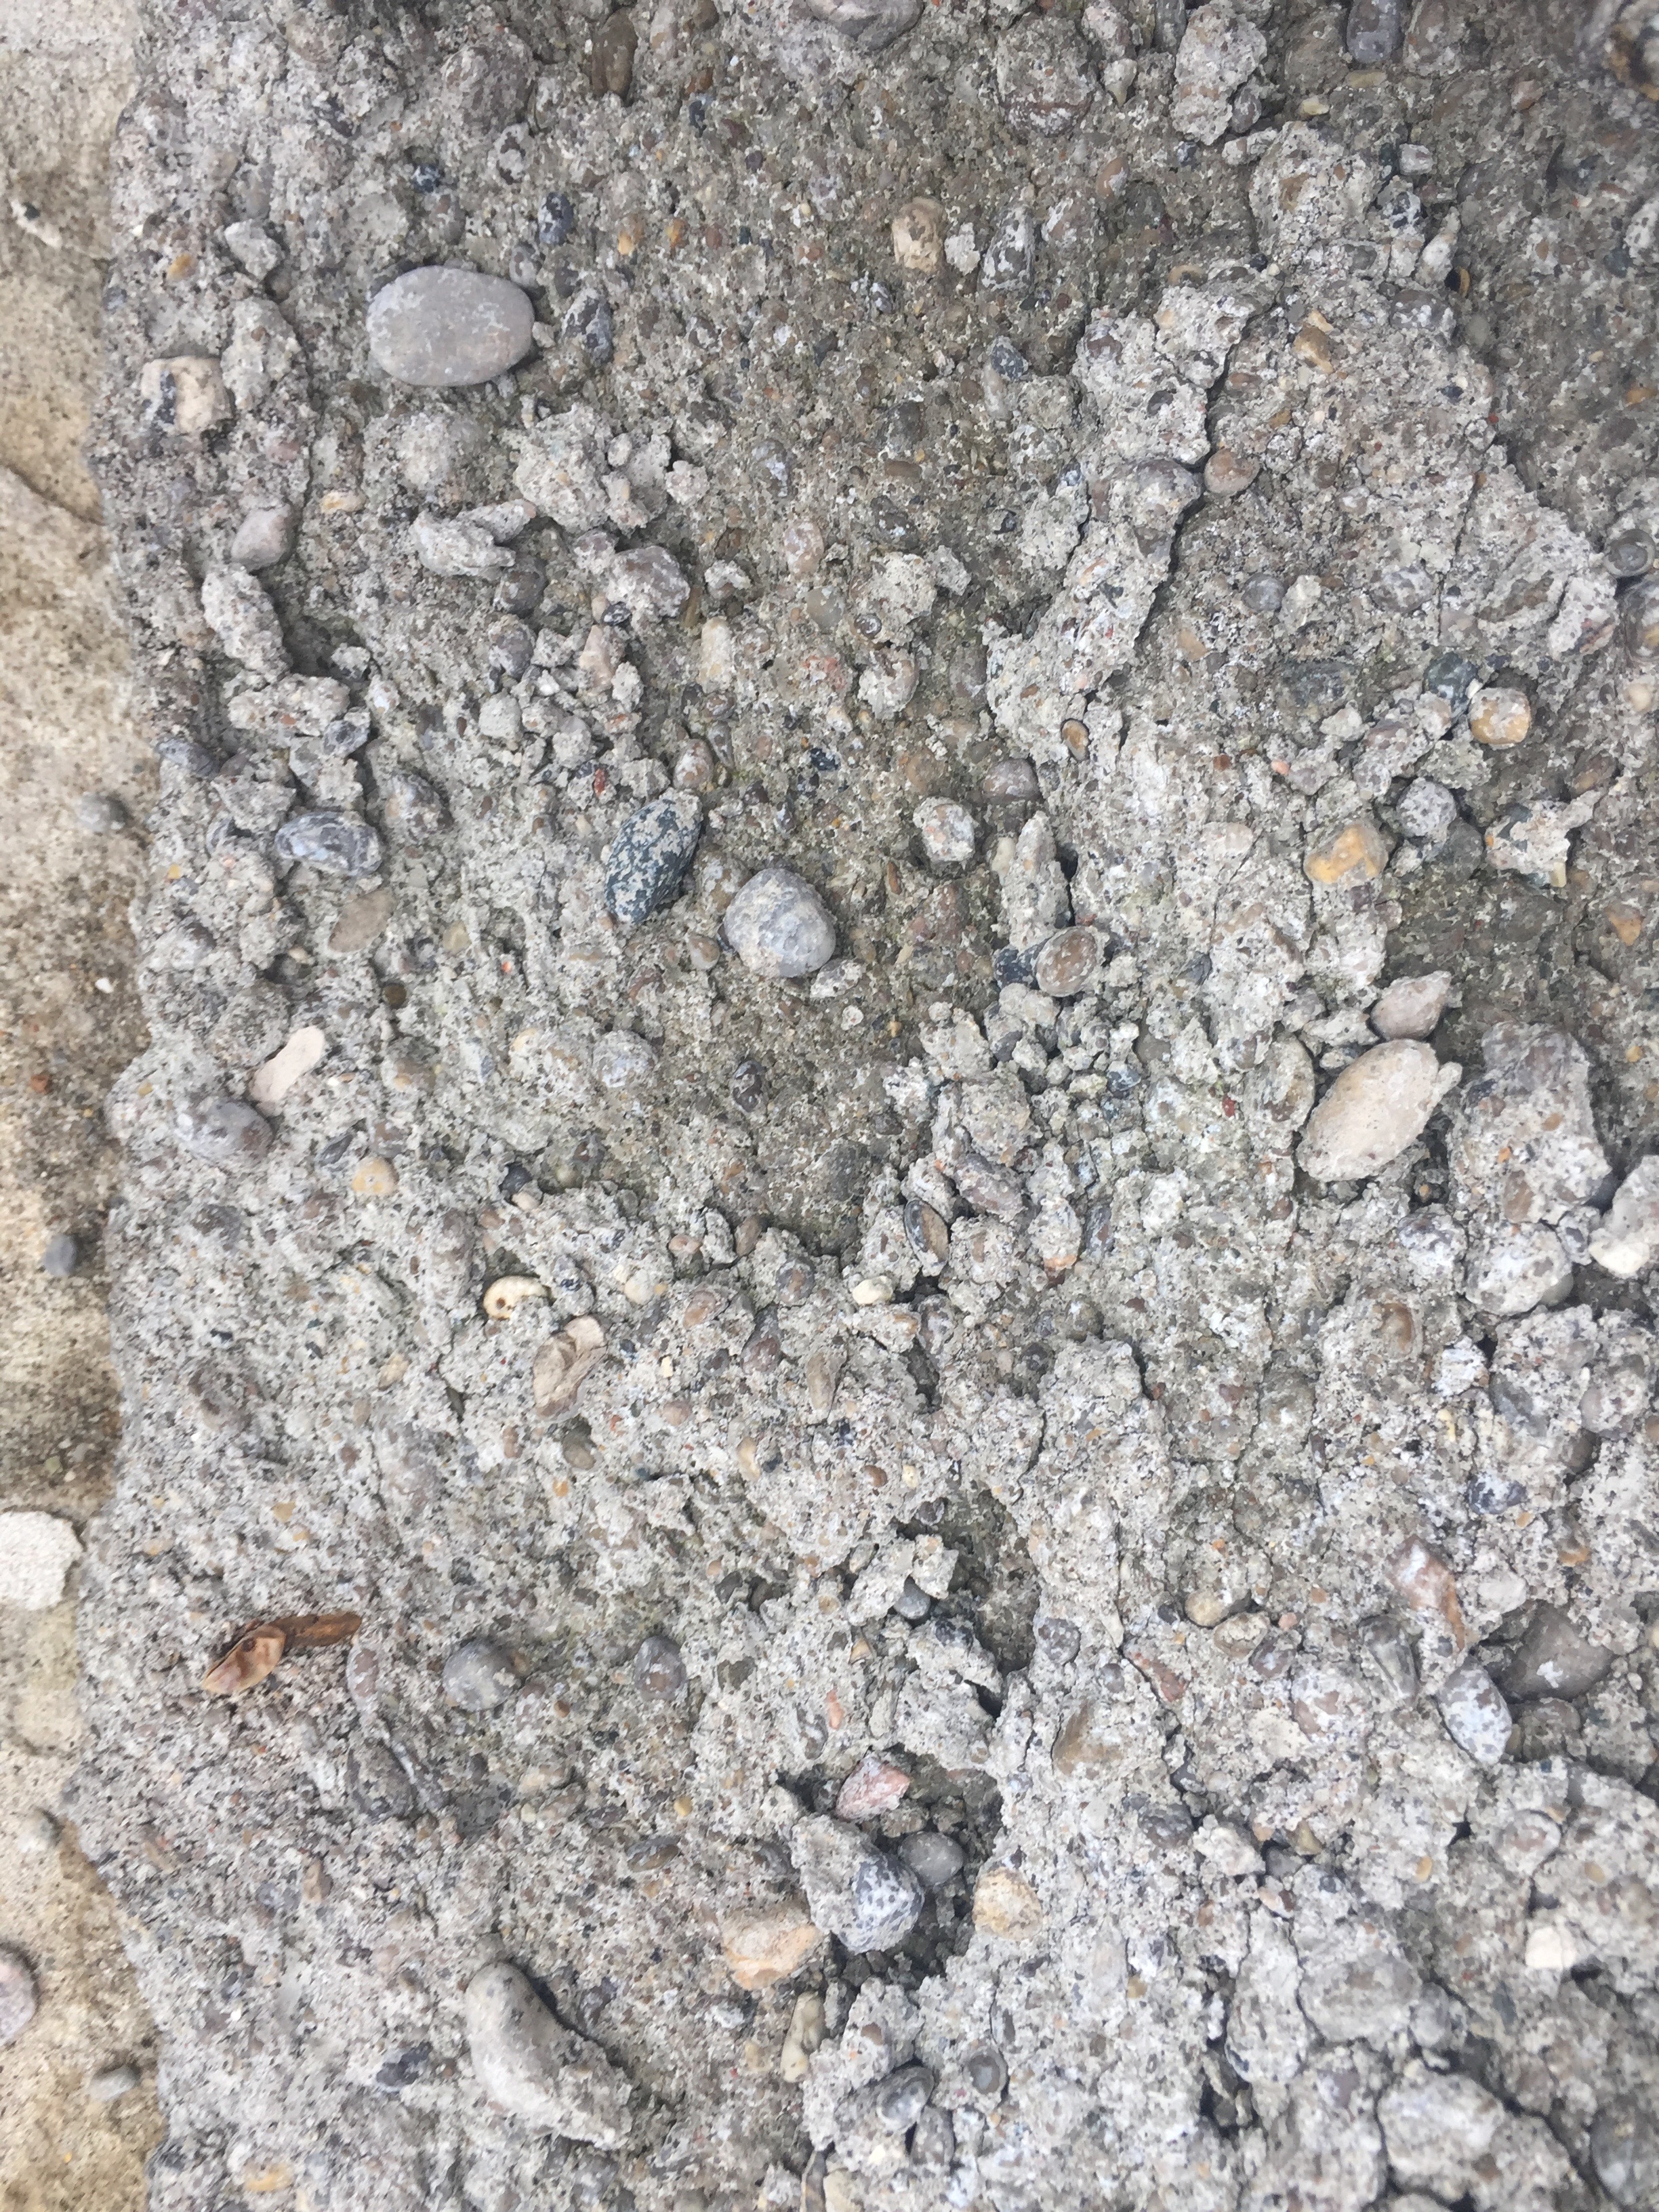 cracked concrete texture seamless